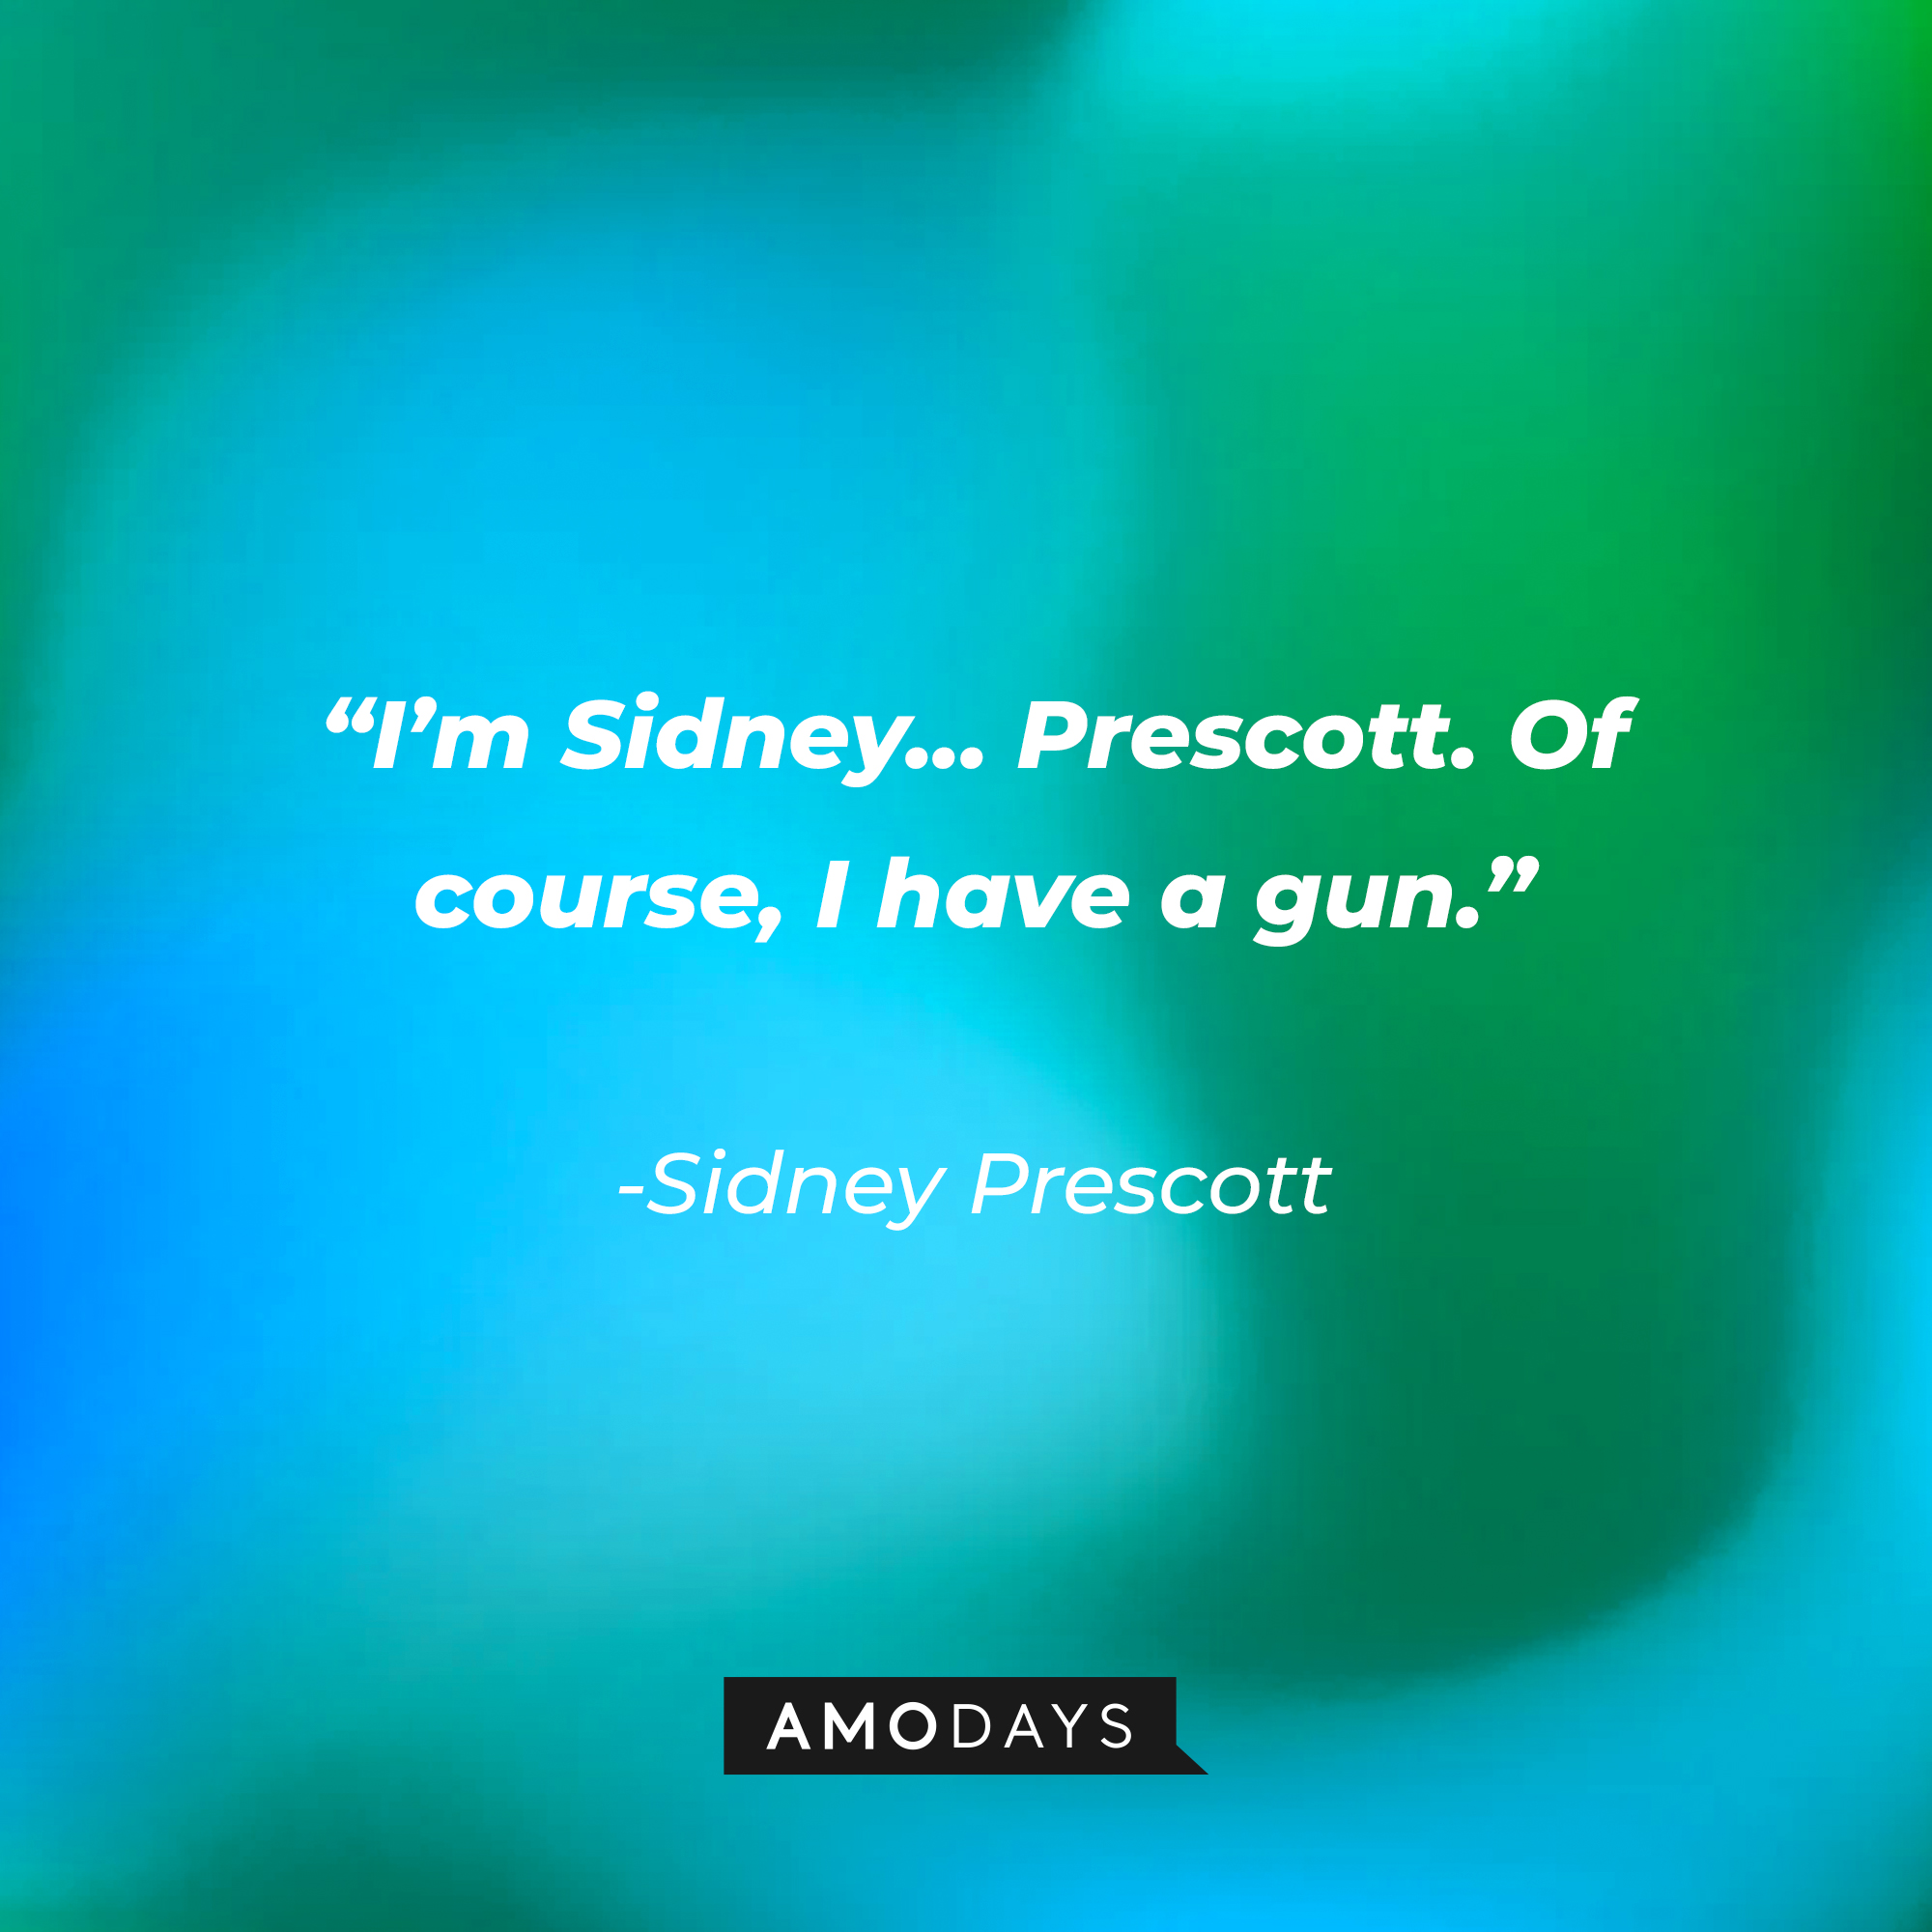 Sidney Prescott’s quote from “Scream '(2020)'”: "I’m Sidney... Prescott. Of course, I have a gun." | Source: AmoDays